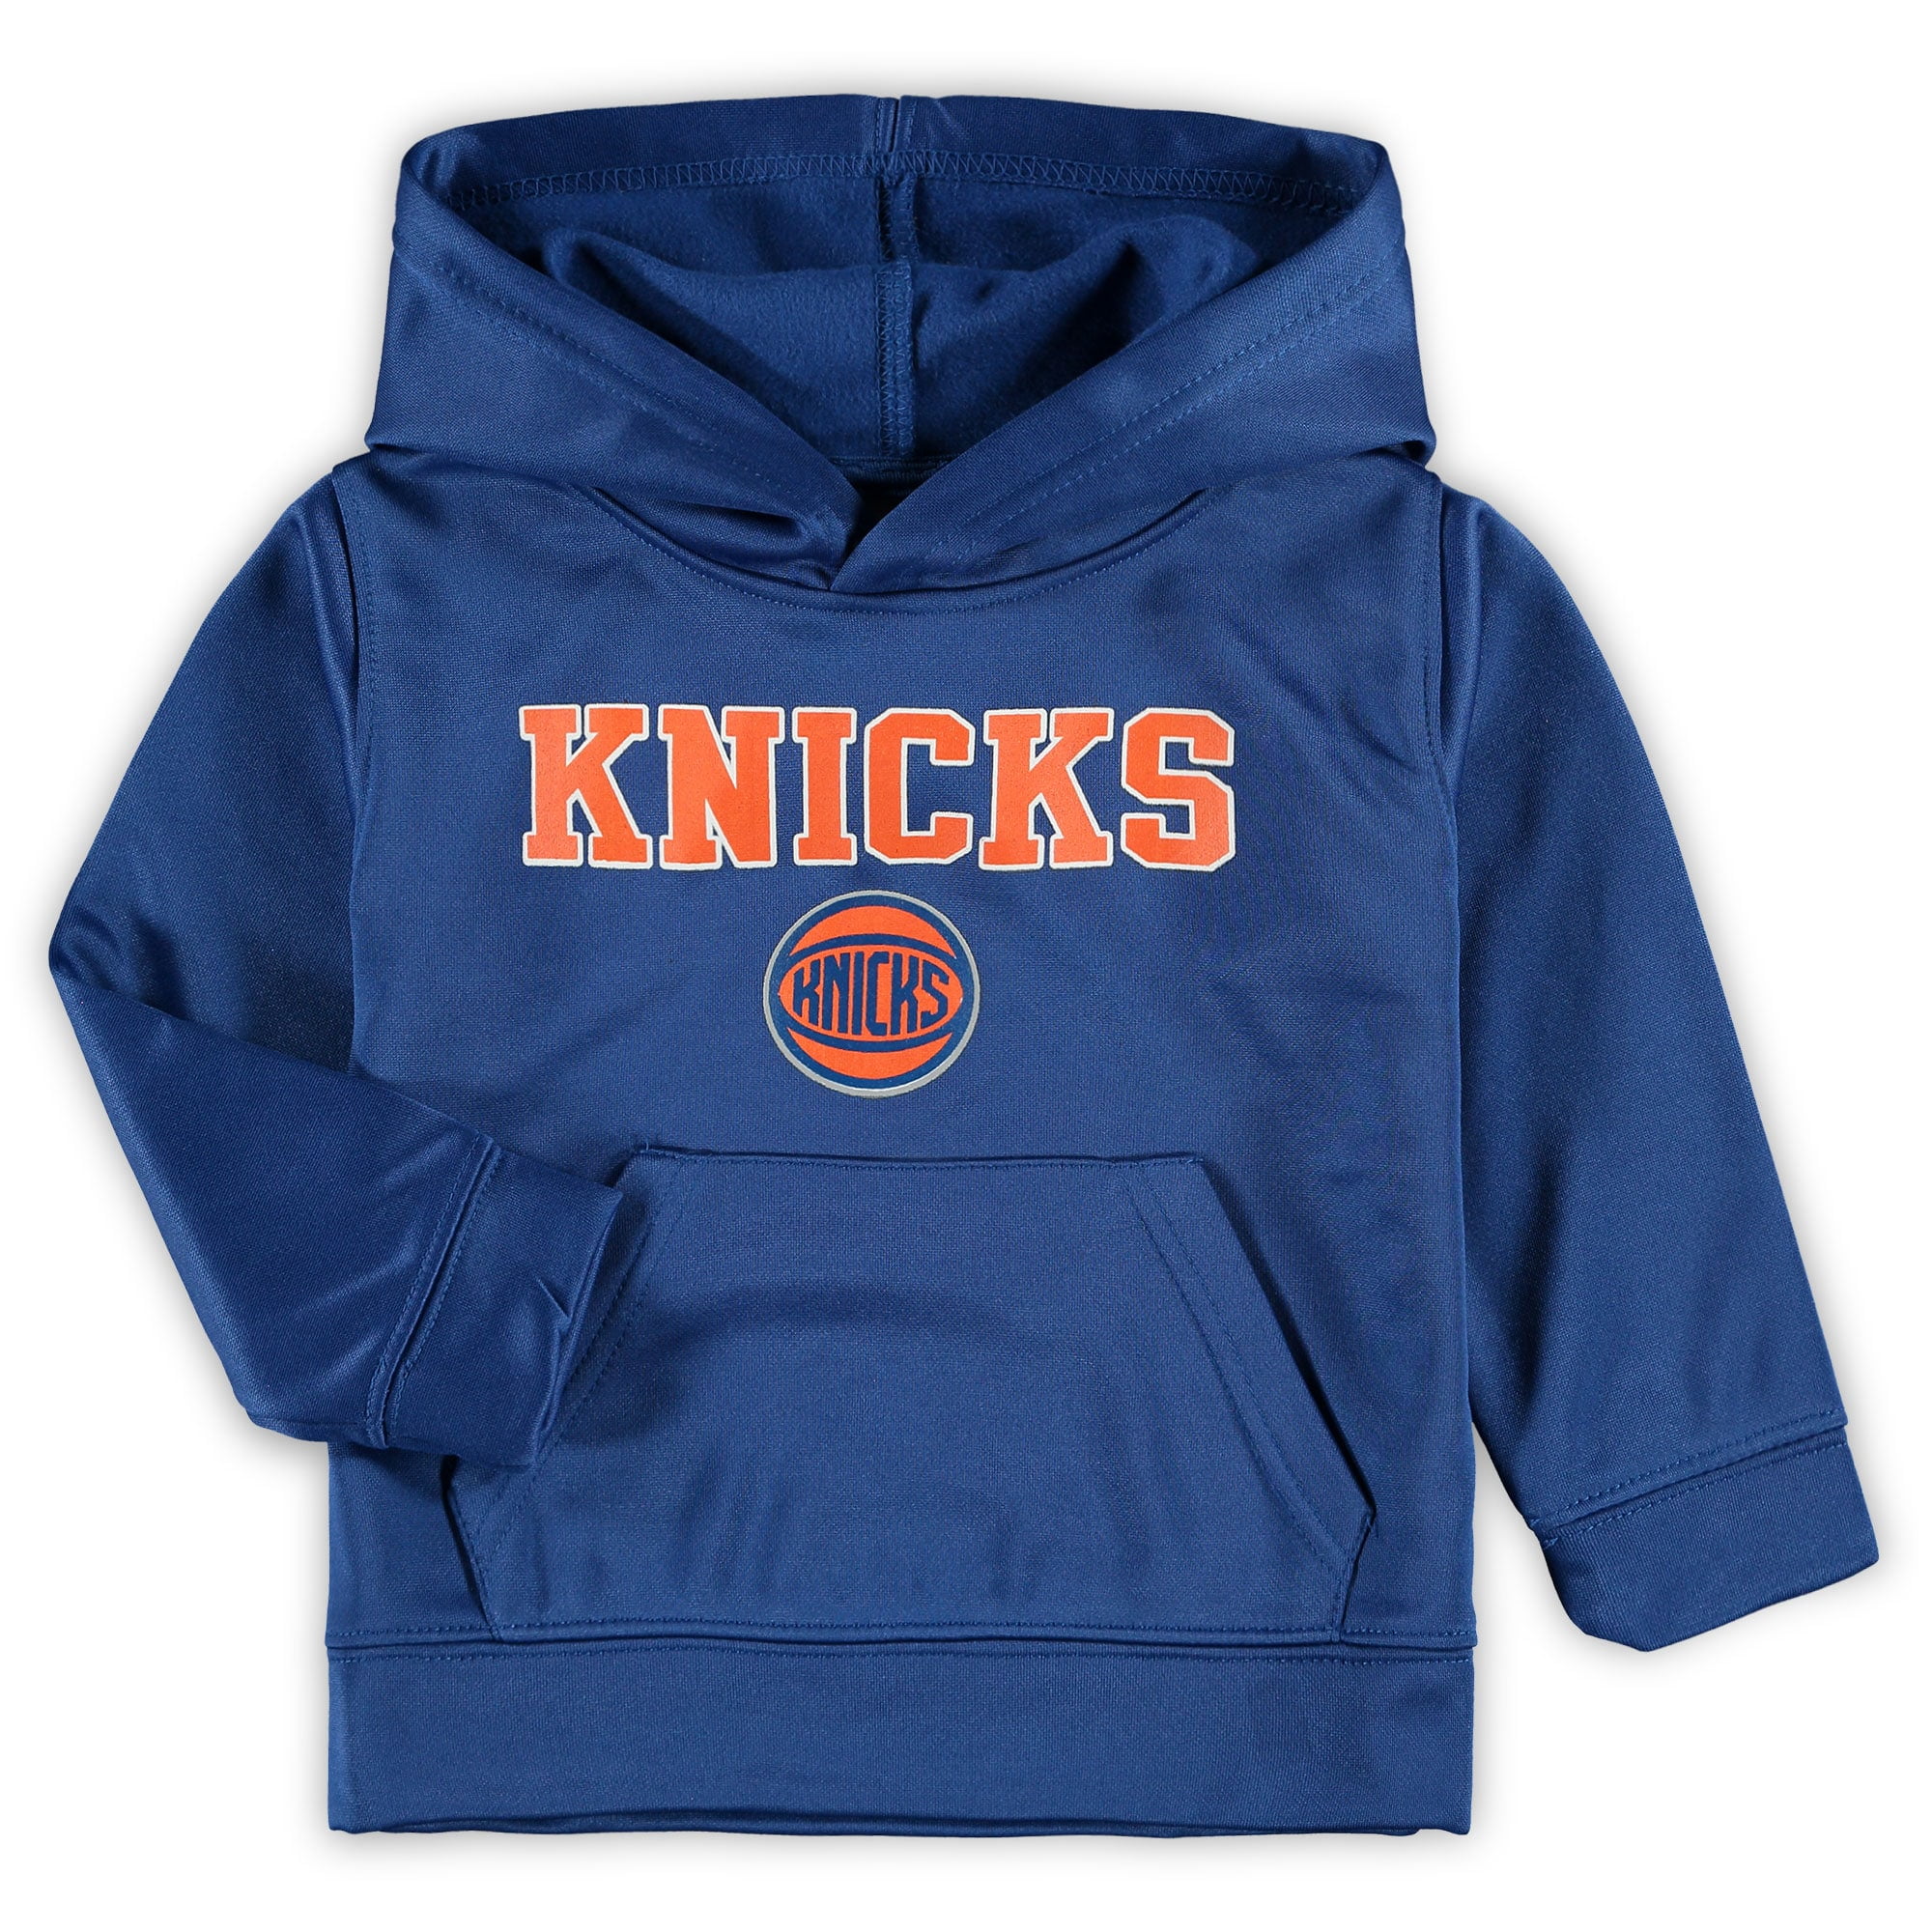 NBA Basketball Harry Potter My Patronus Is A New York Knicks Sweatshirt